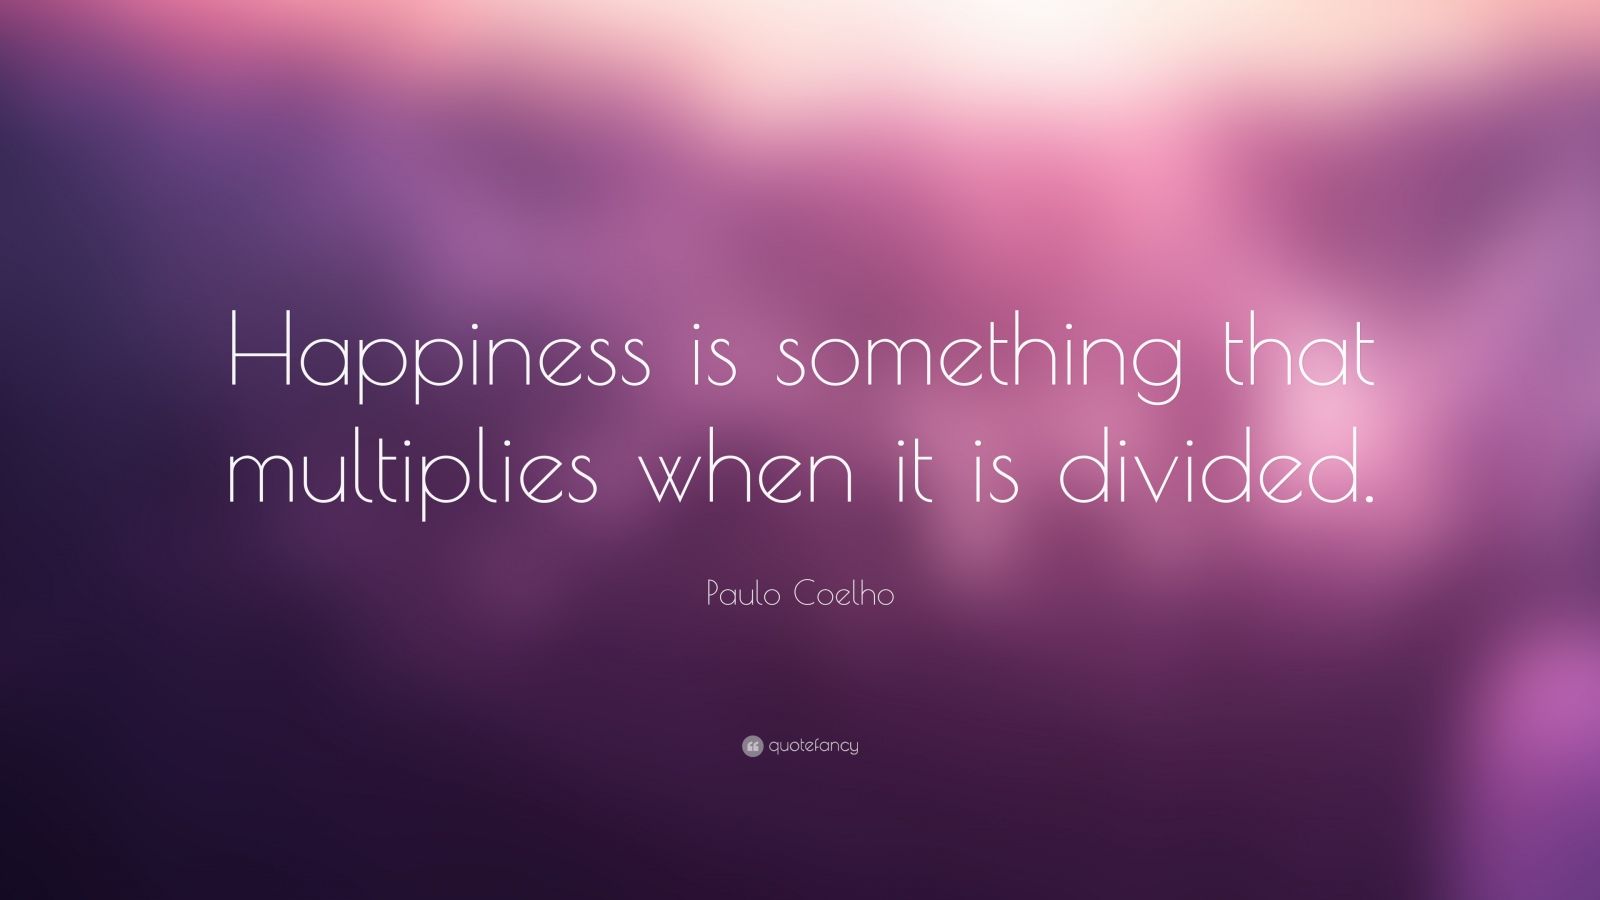 Paulo Coelho Quotes (28 wallpapers) - Quotefancy